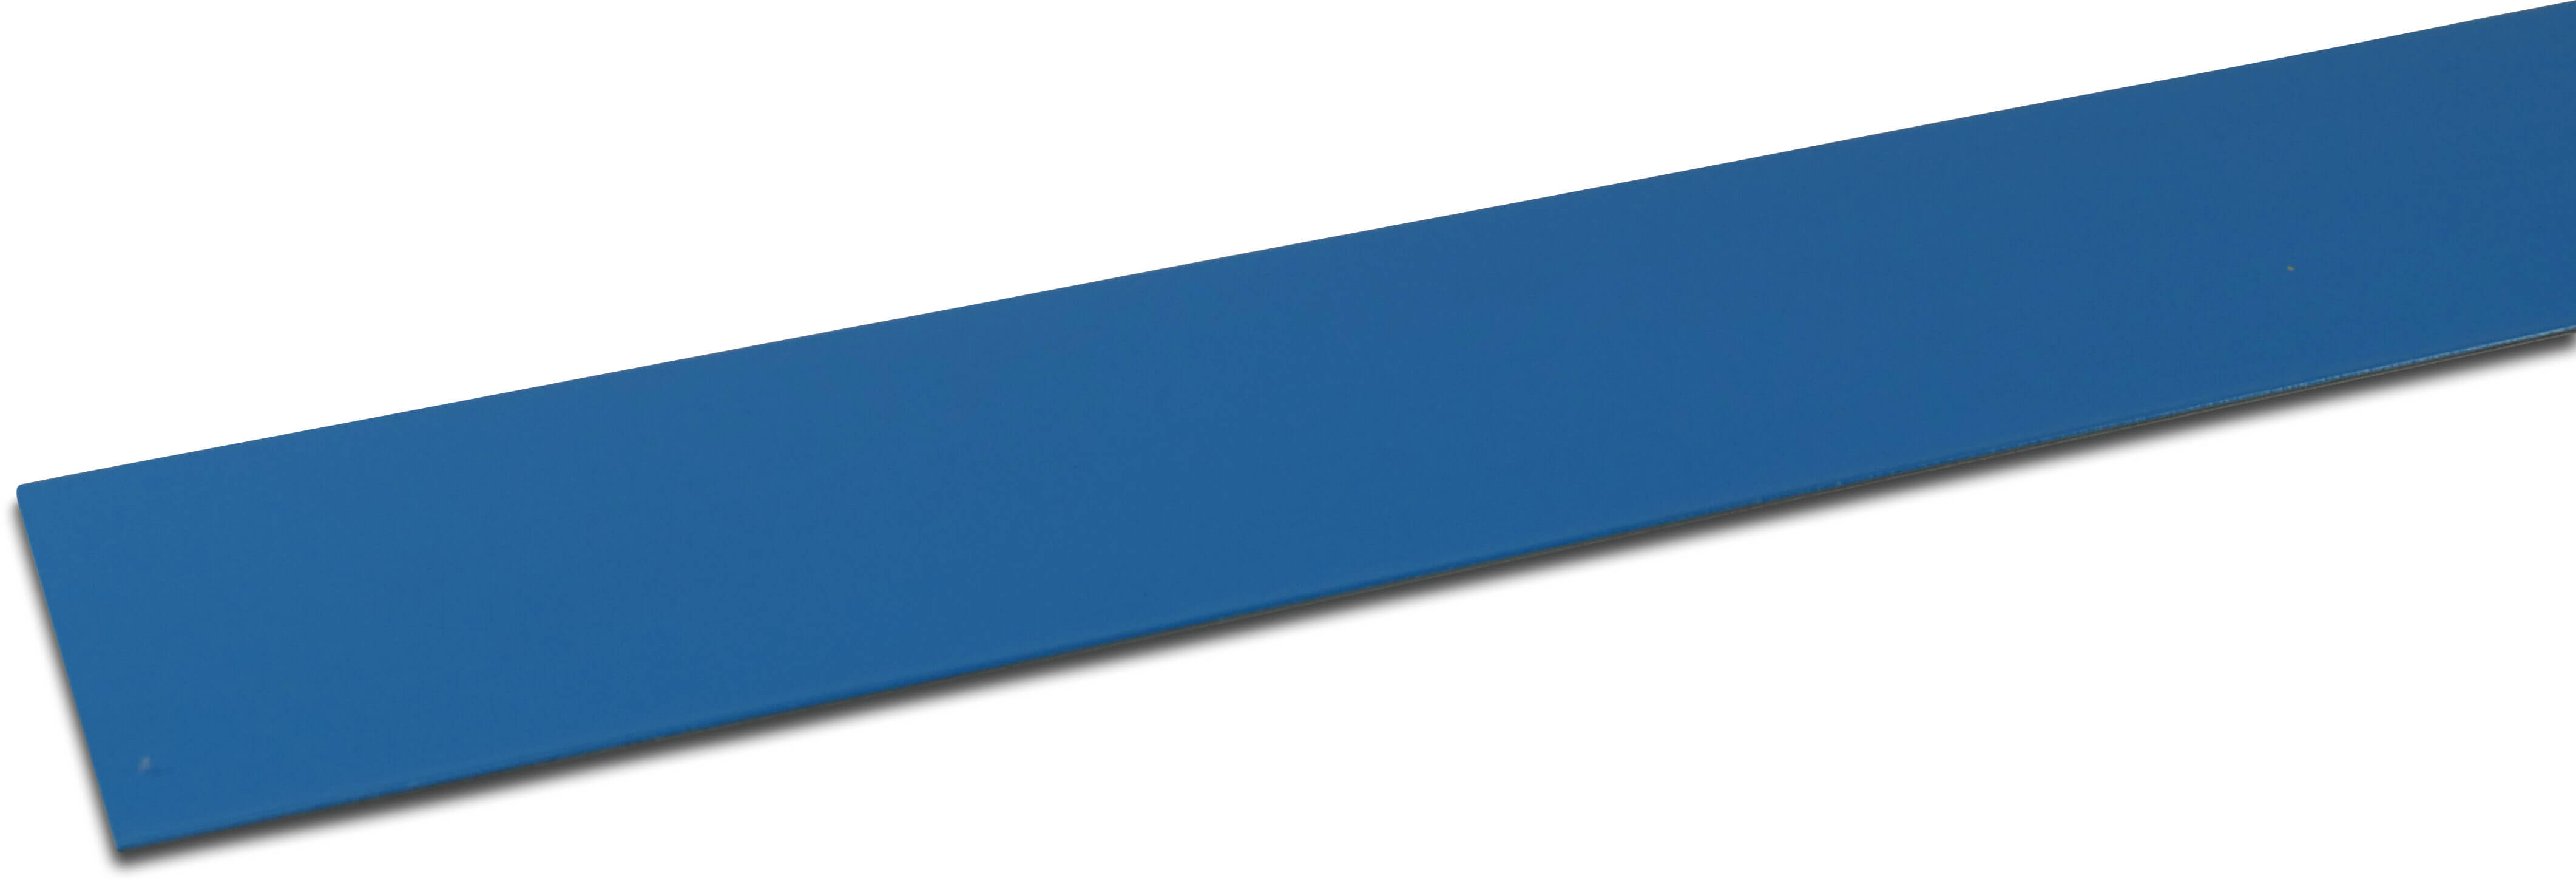 Elbe Strip PVC coated metal 70 mm x 2000 mm blue 2m